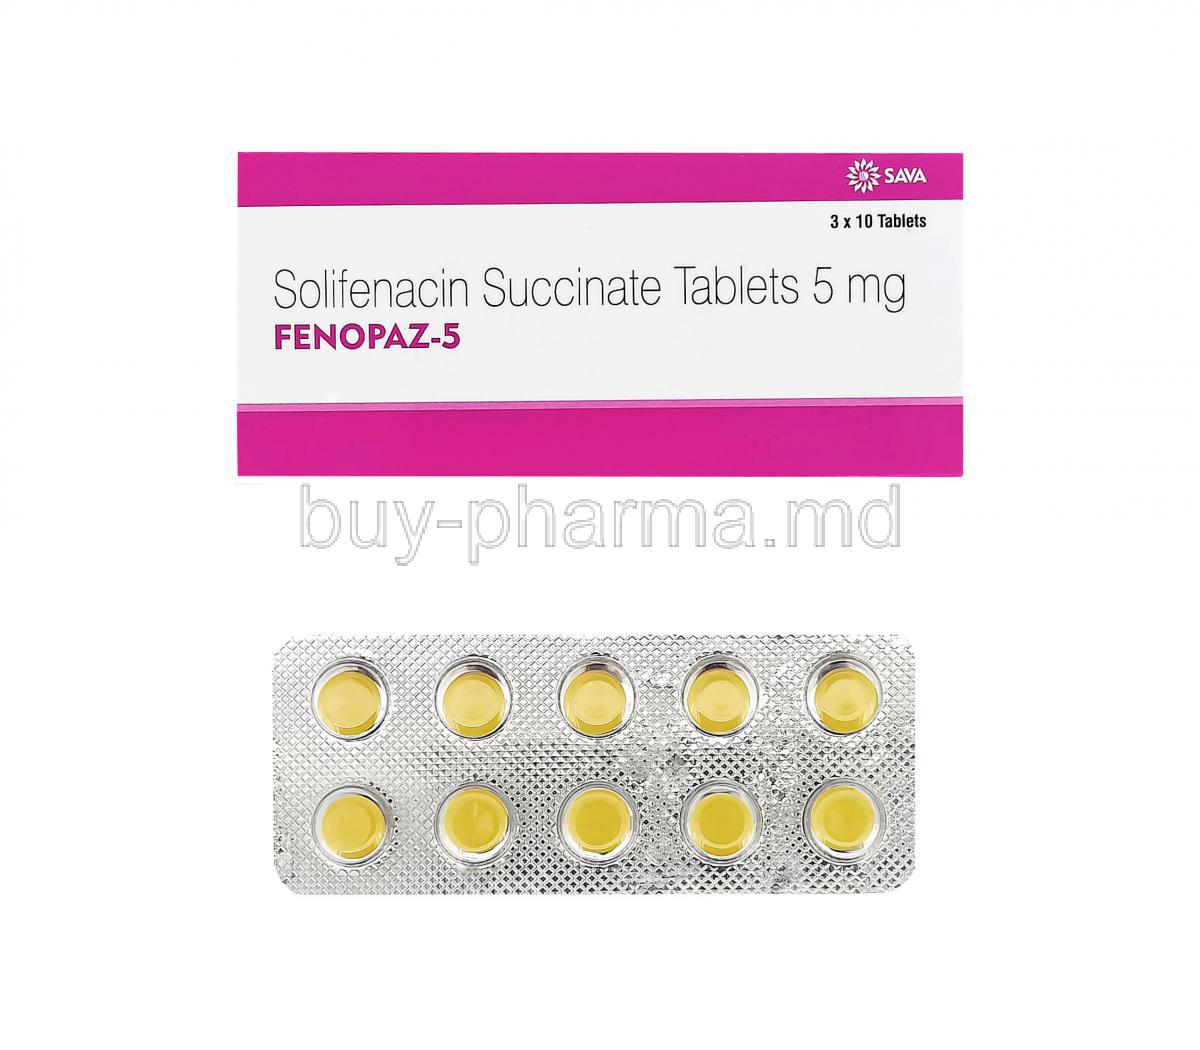 Fenopaz-5, Generic Vesicare, Solifenacin Succinate 5mg